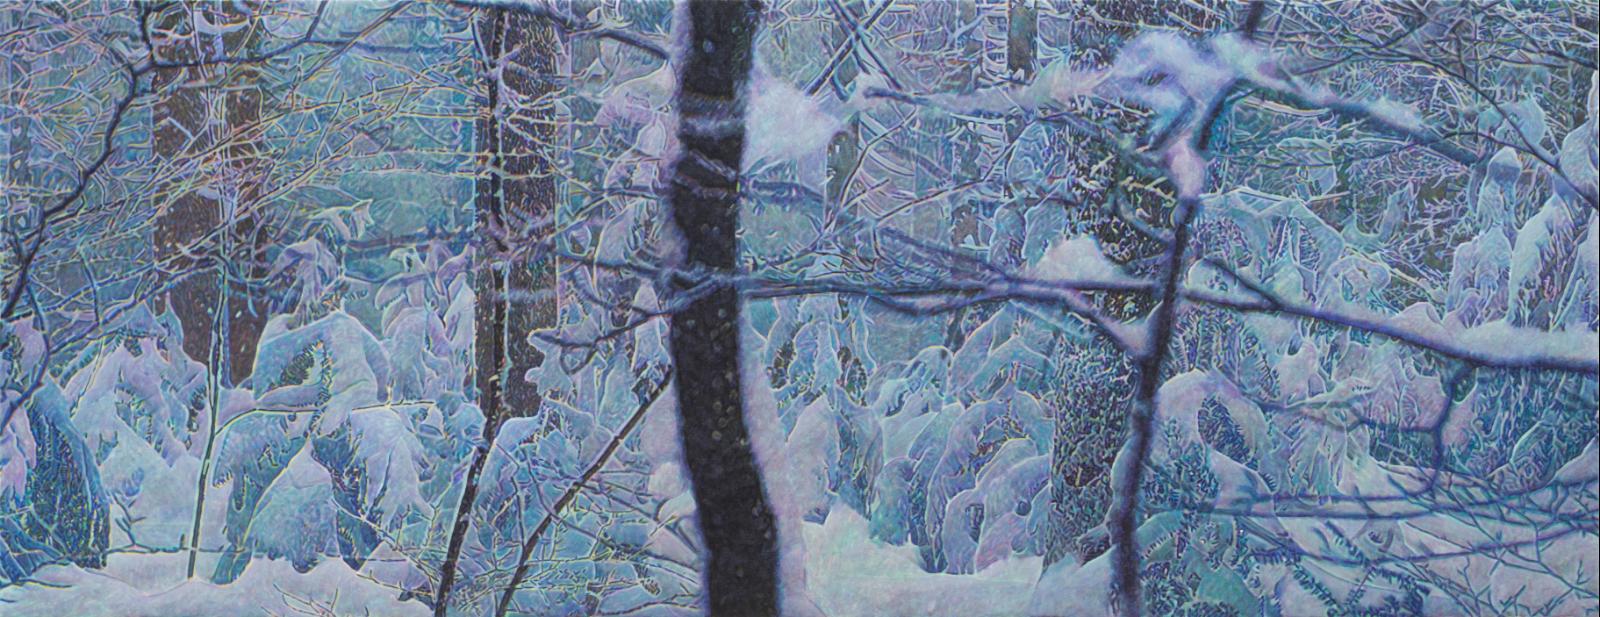 Thomas Schiela, Altreichenau IV, 09.2018, Aquarell auf Leinwand, 100 cm x 260 cm, Preis auf Anfrage, sct003kü, Galerie Cyprian Brenner